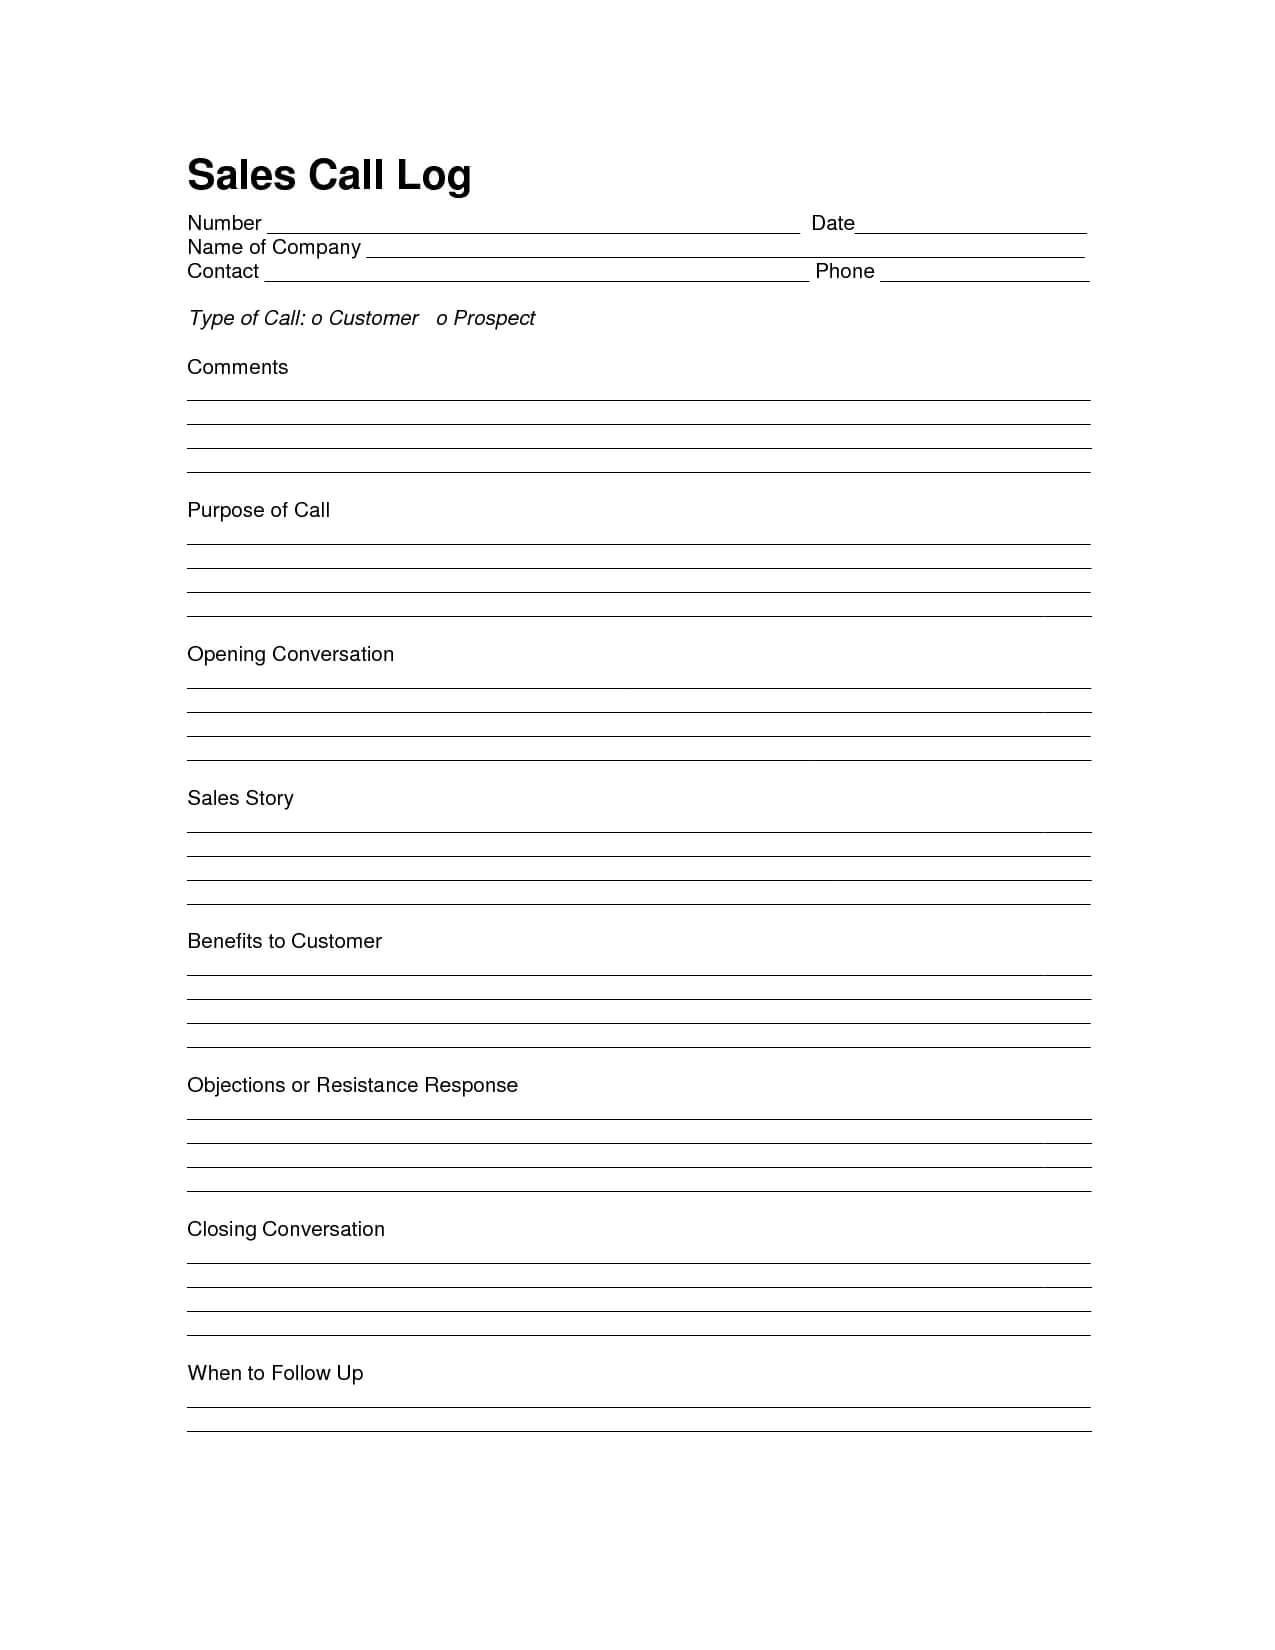 Sales Log Sheet Template | Sales Call Log Template | Call For Sales Call Report Template Free